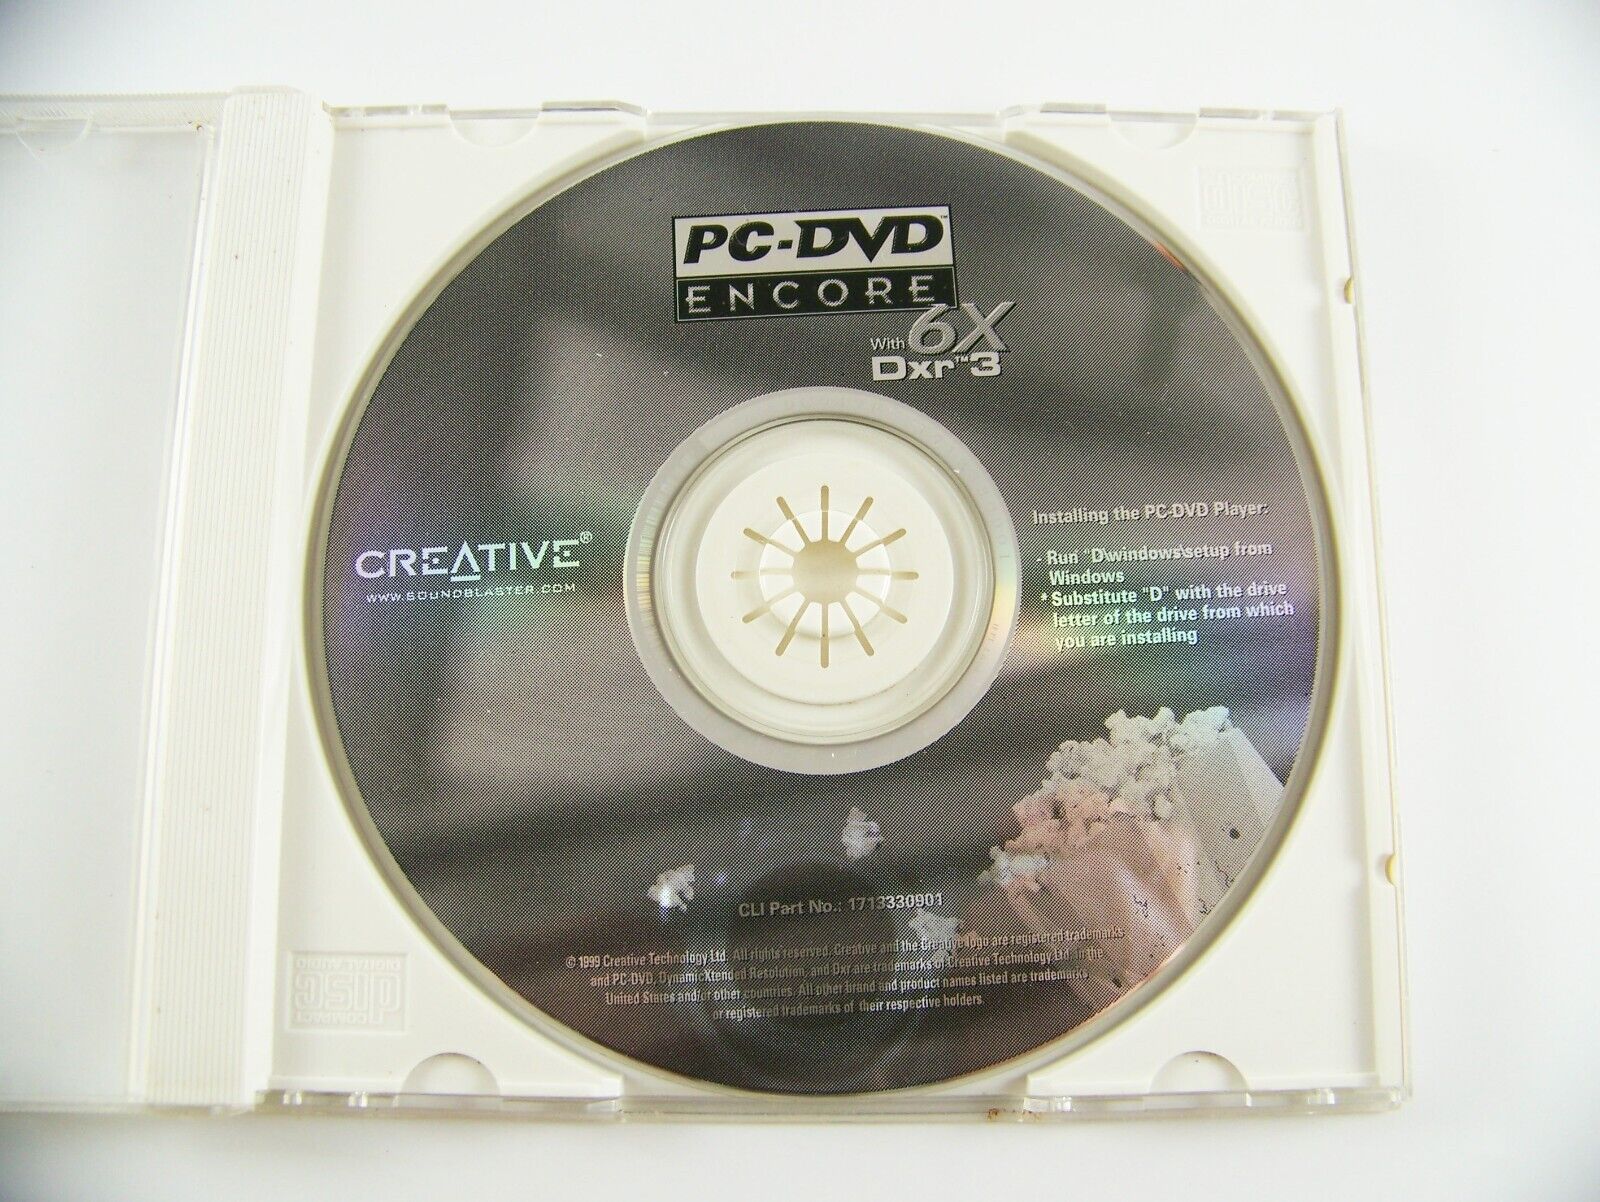 Creative PC-DVD Encore with 6X Dxr3 Installation CD-ROM 1999